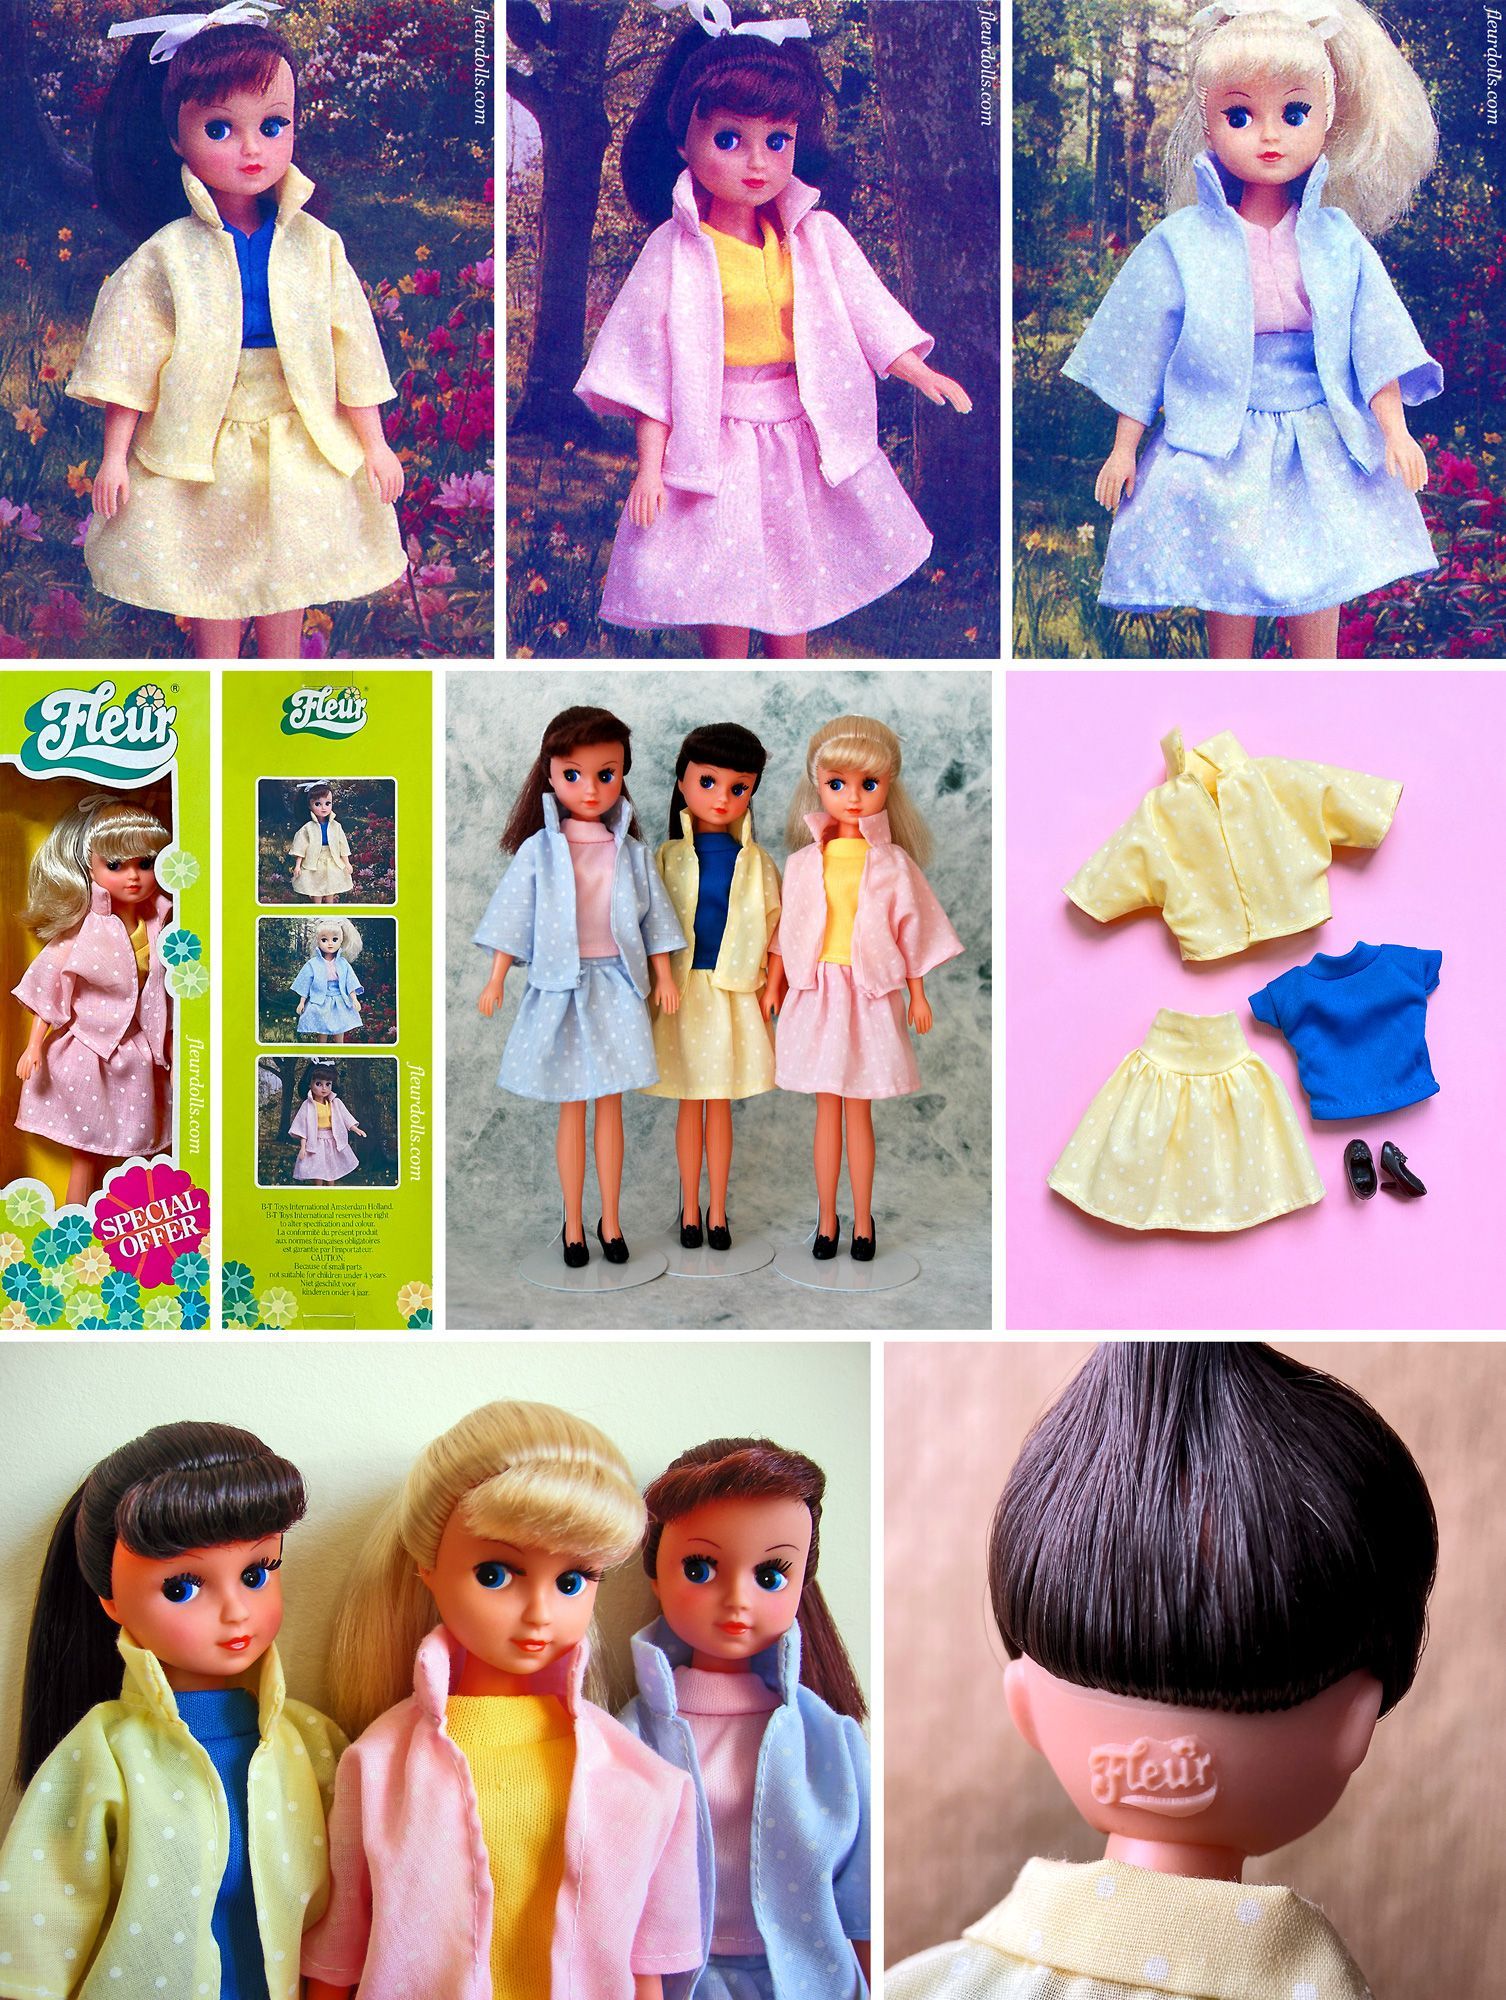 Polka Dot Special Offer Fleur Otto Simon 1986 yellow blue pink fashion doll